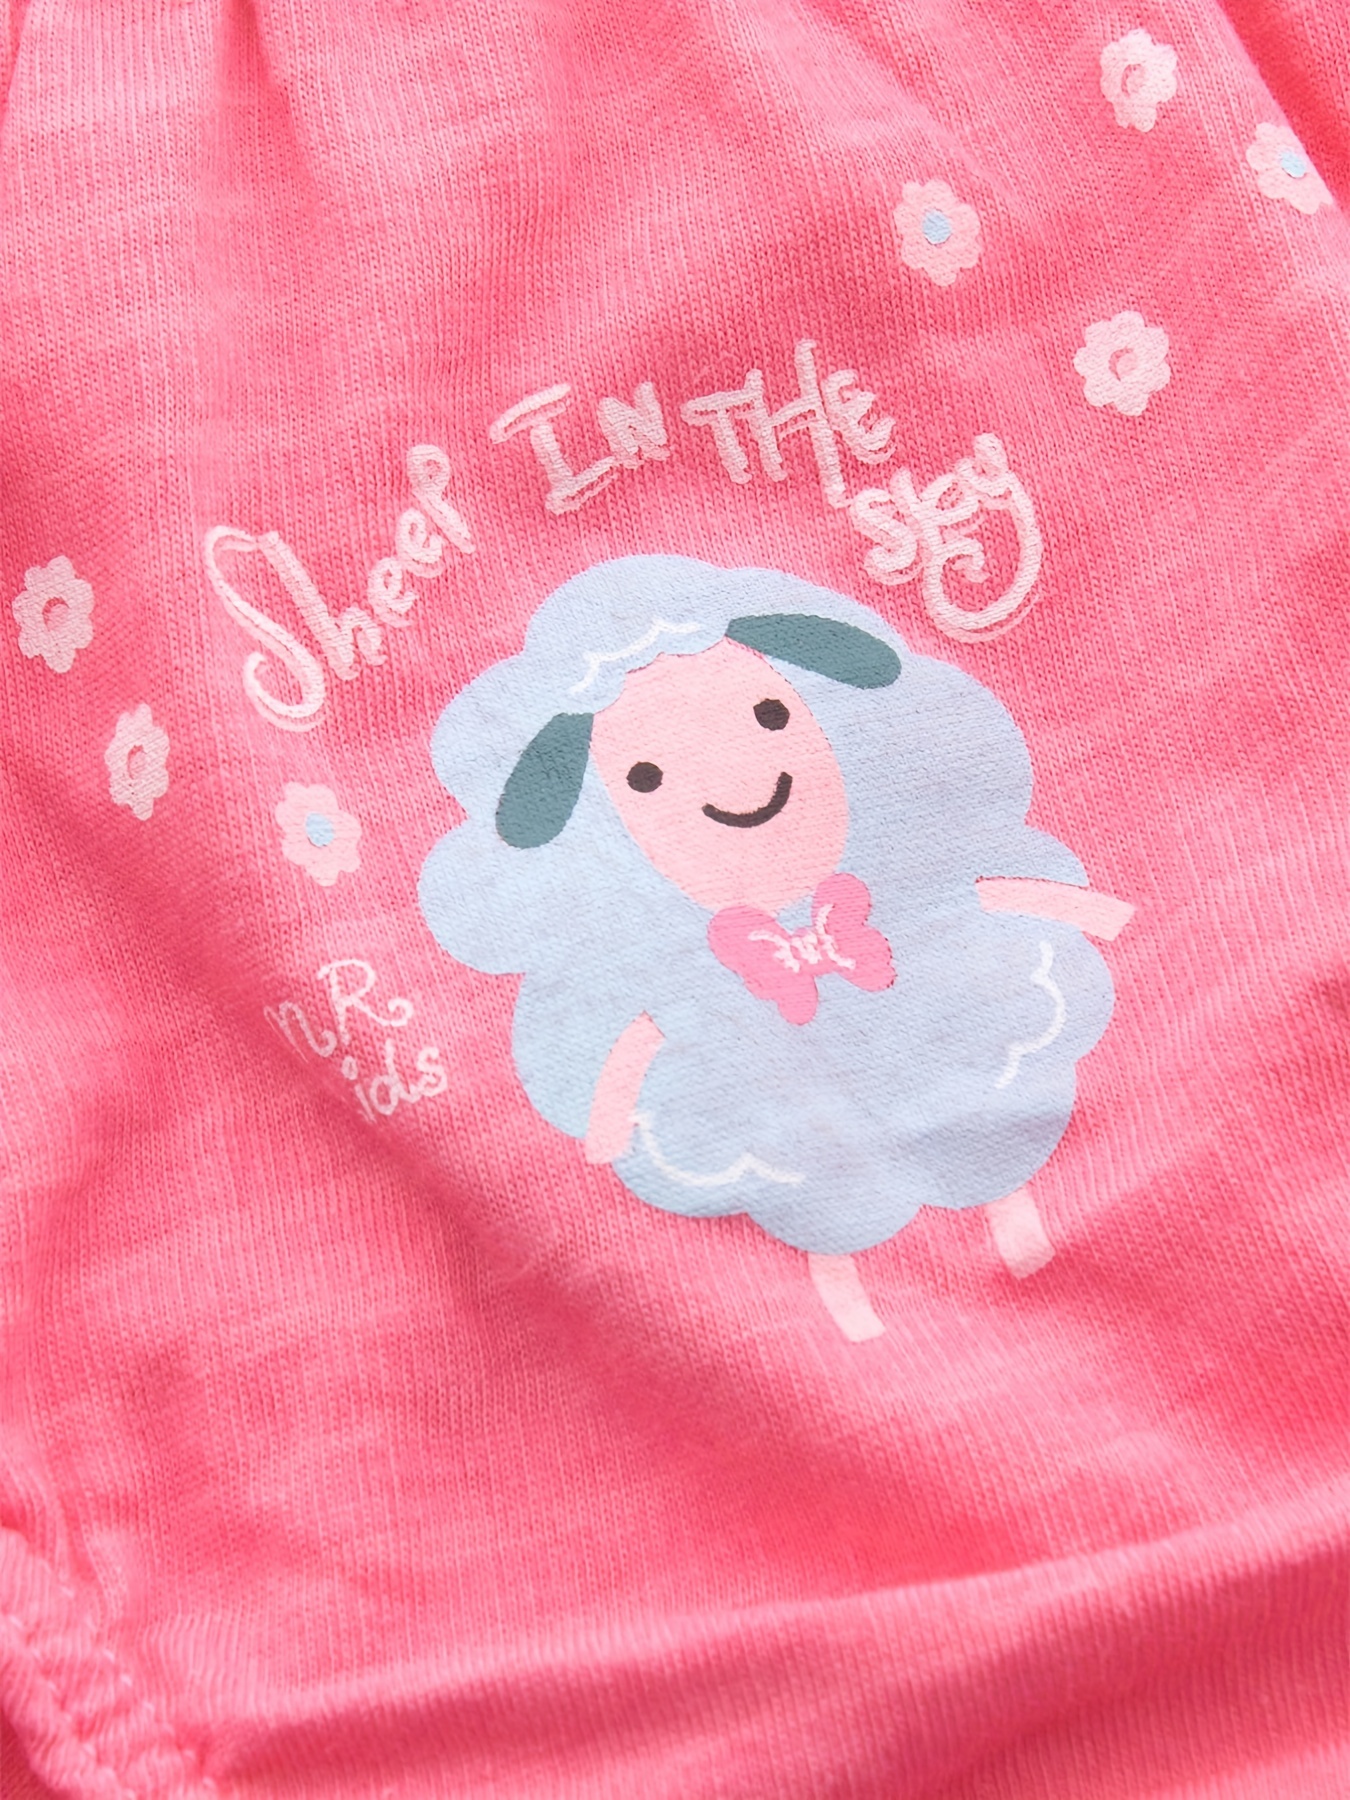 Cute Animal Sheep Love Pattern Underwear for Women Girls, Cotton